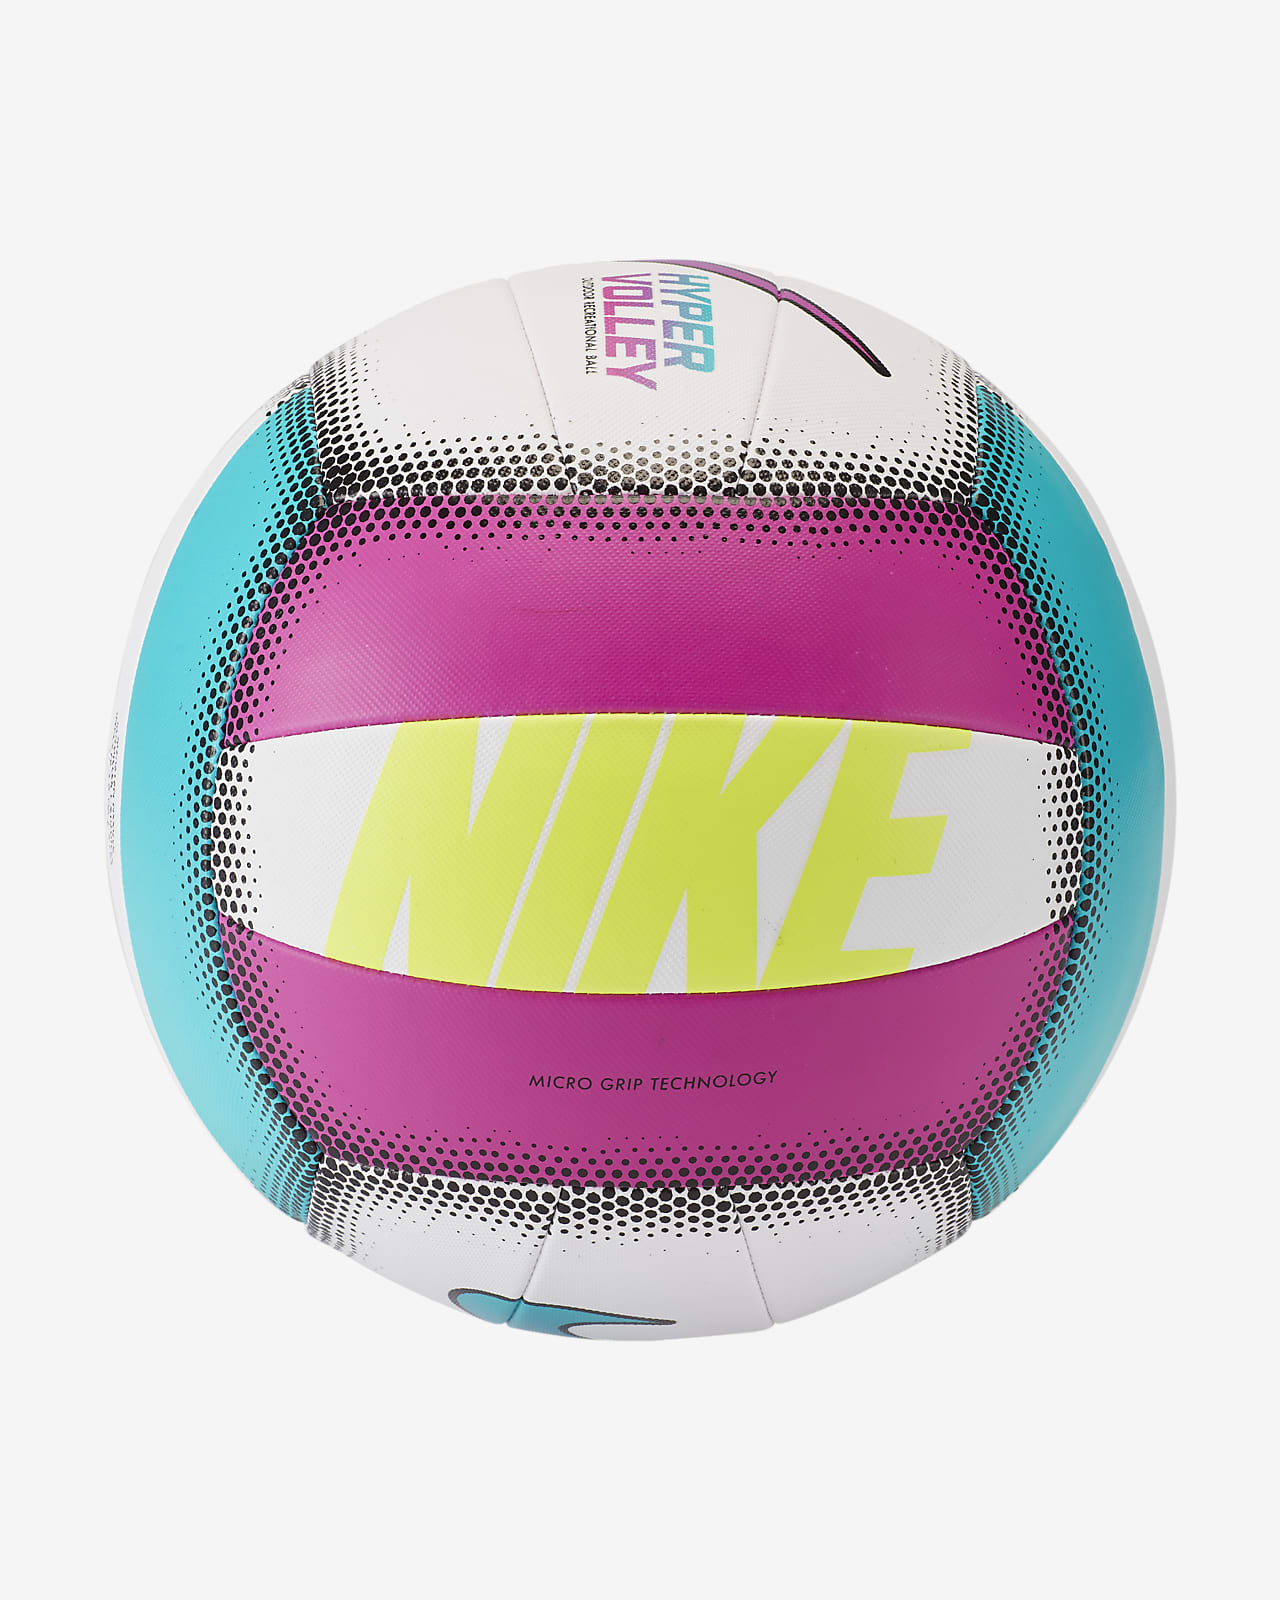 nike hyper volleyball